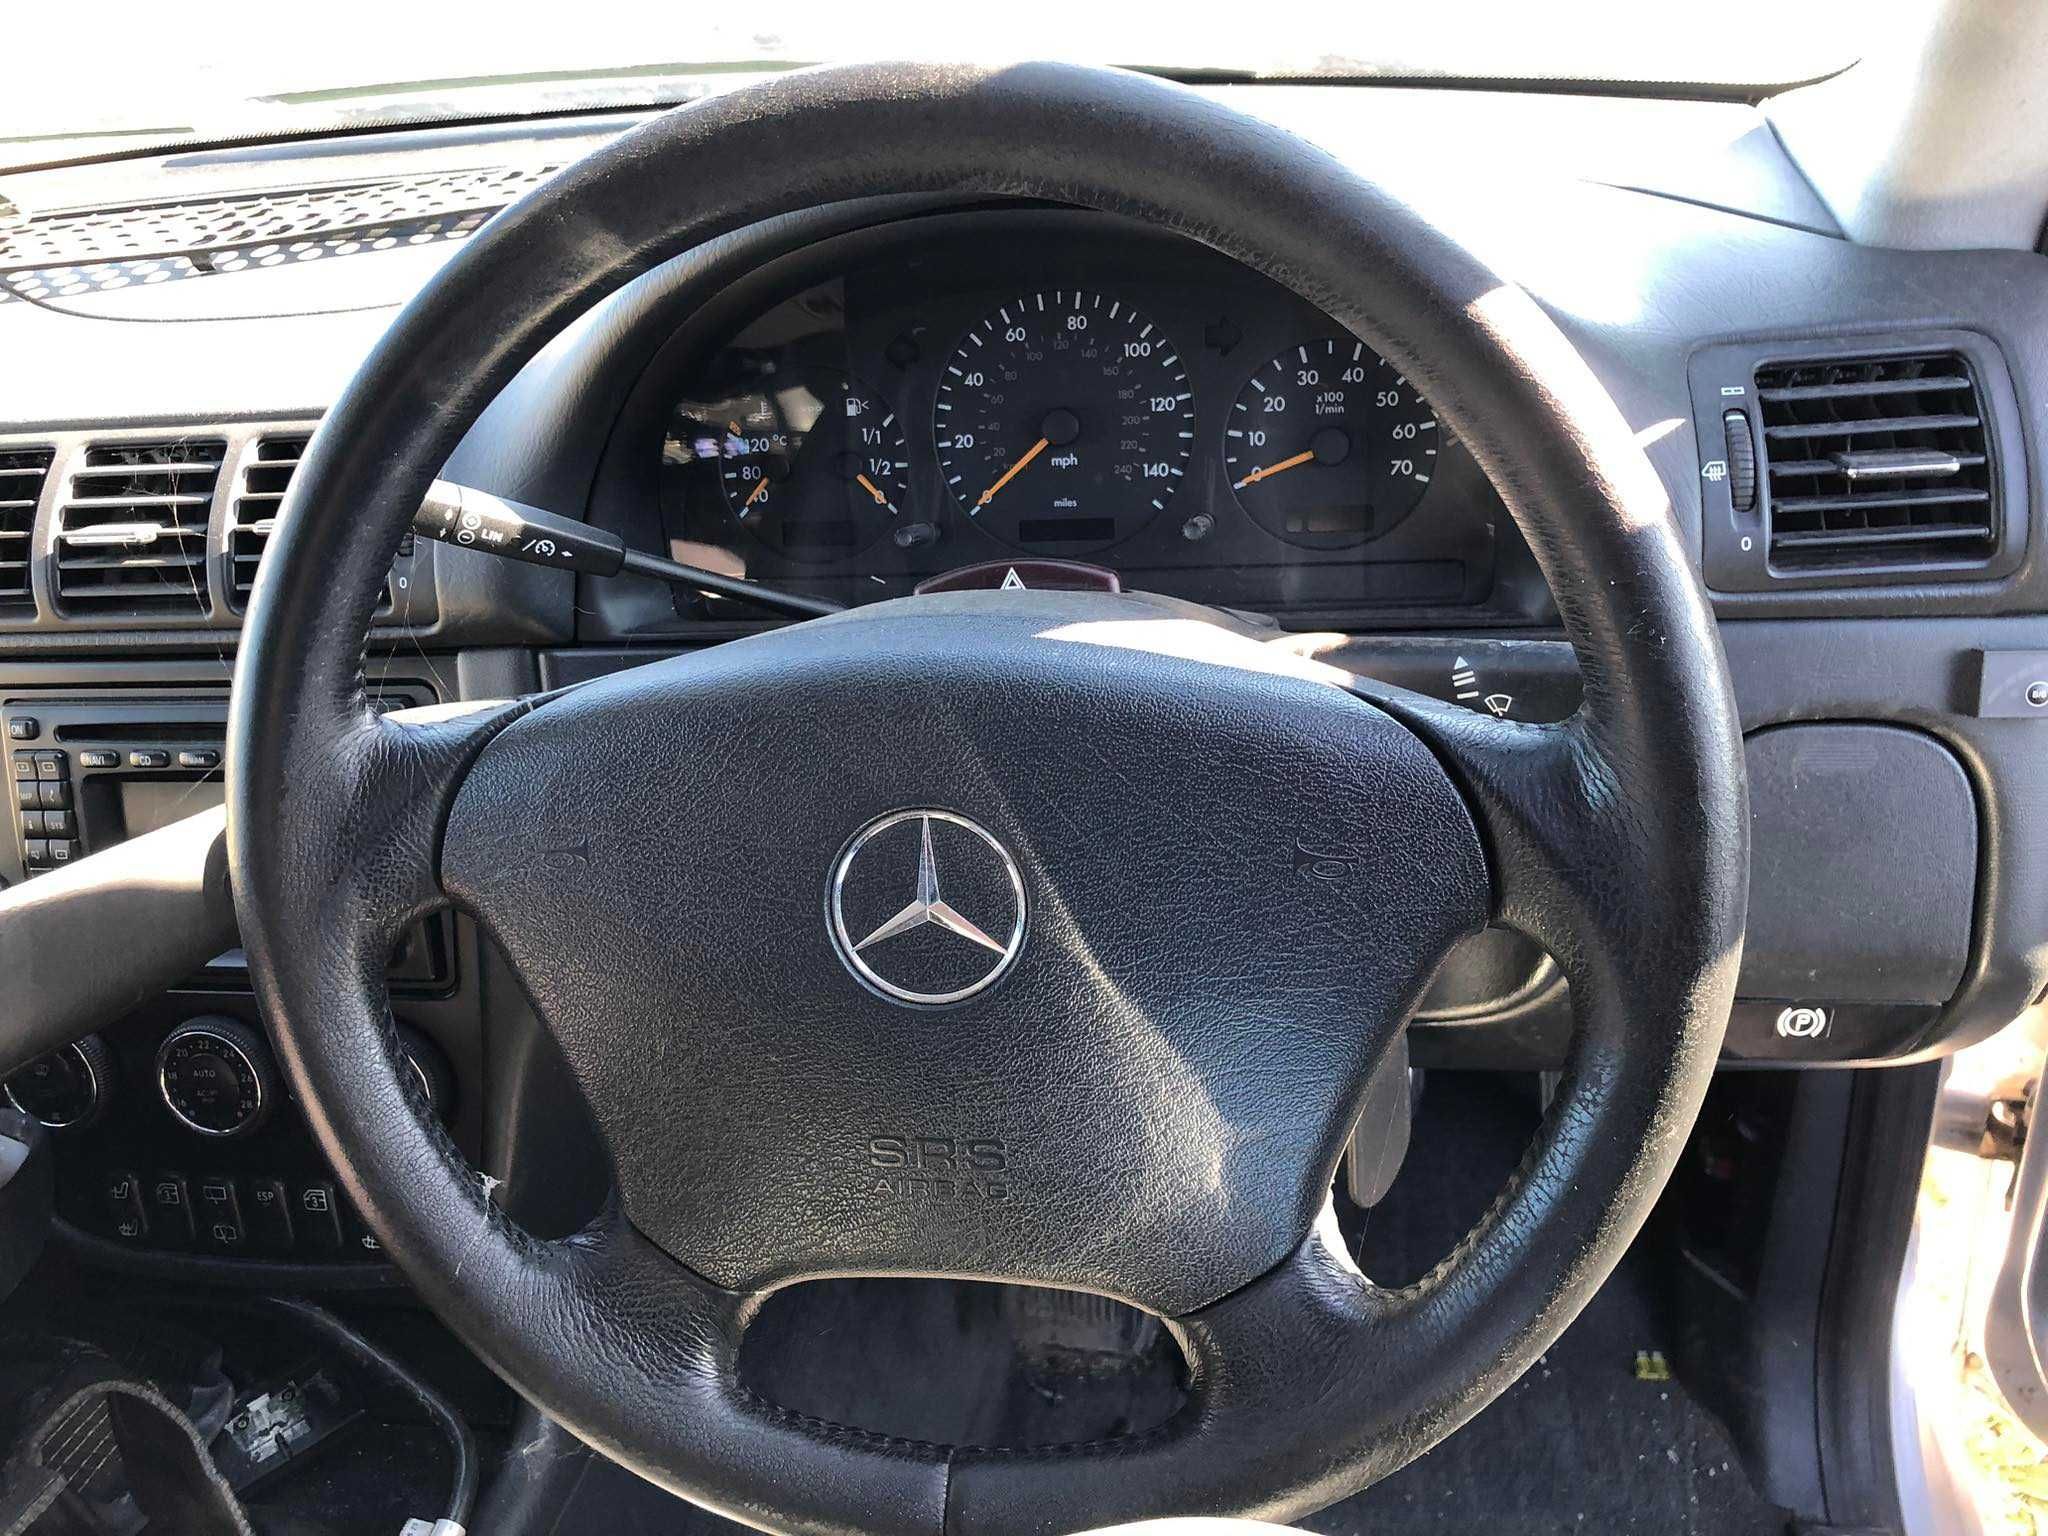 Mercedes-Benz ML 320